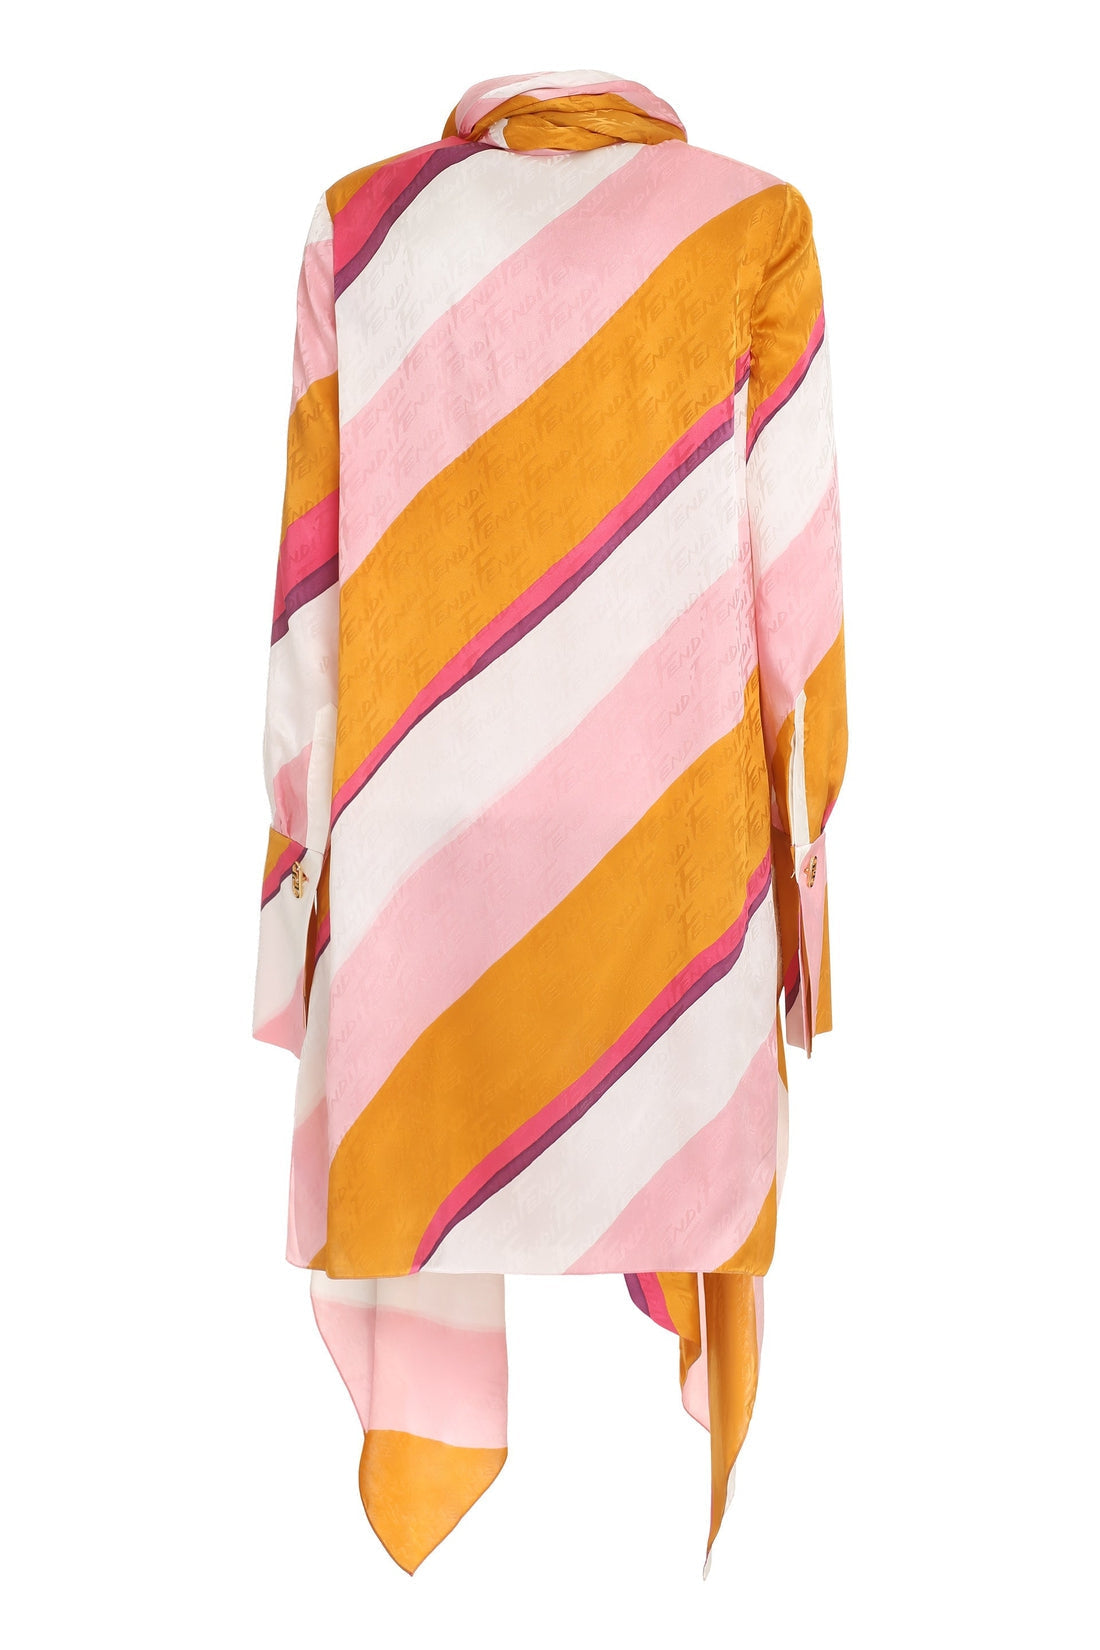 Fendi-OUTLET-SALE-Printed silk dress-ARCHIVIST